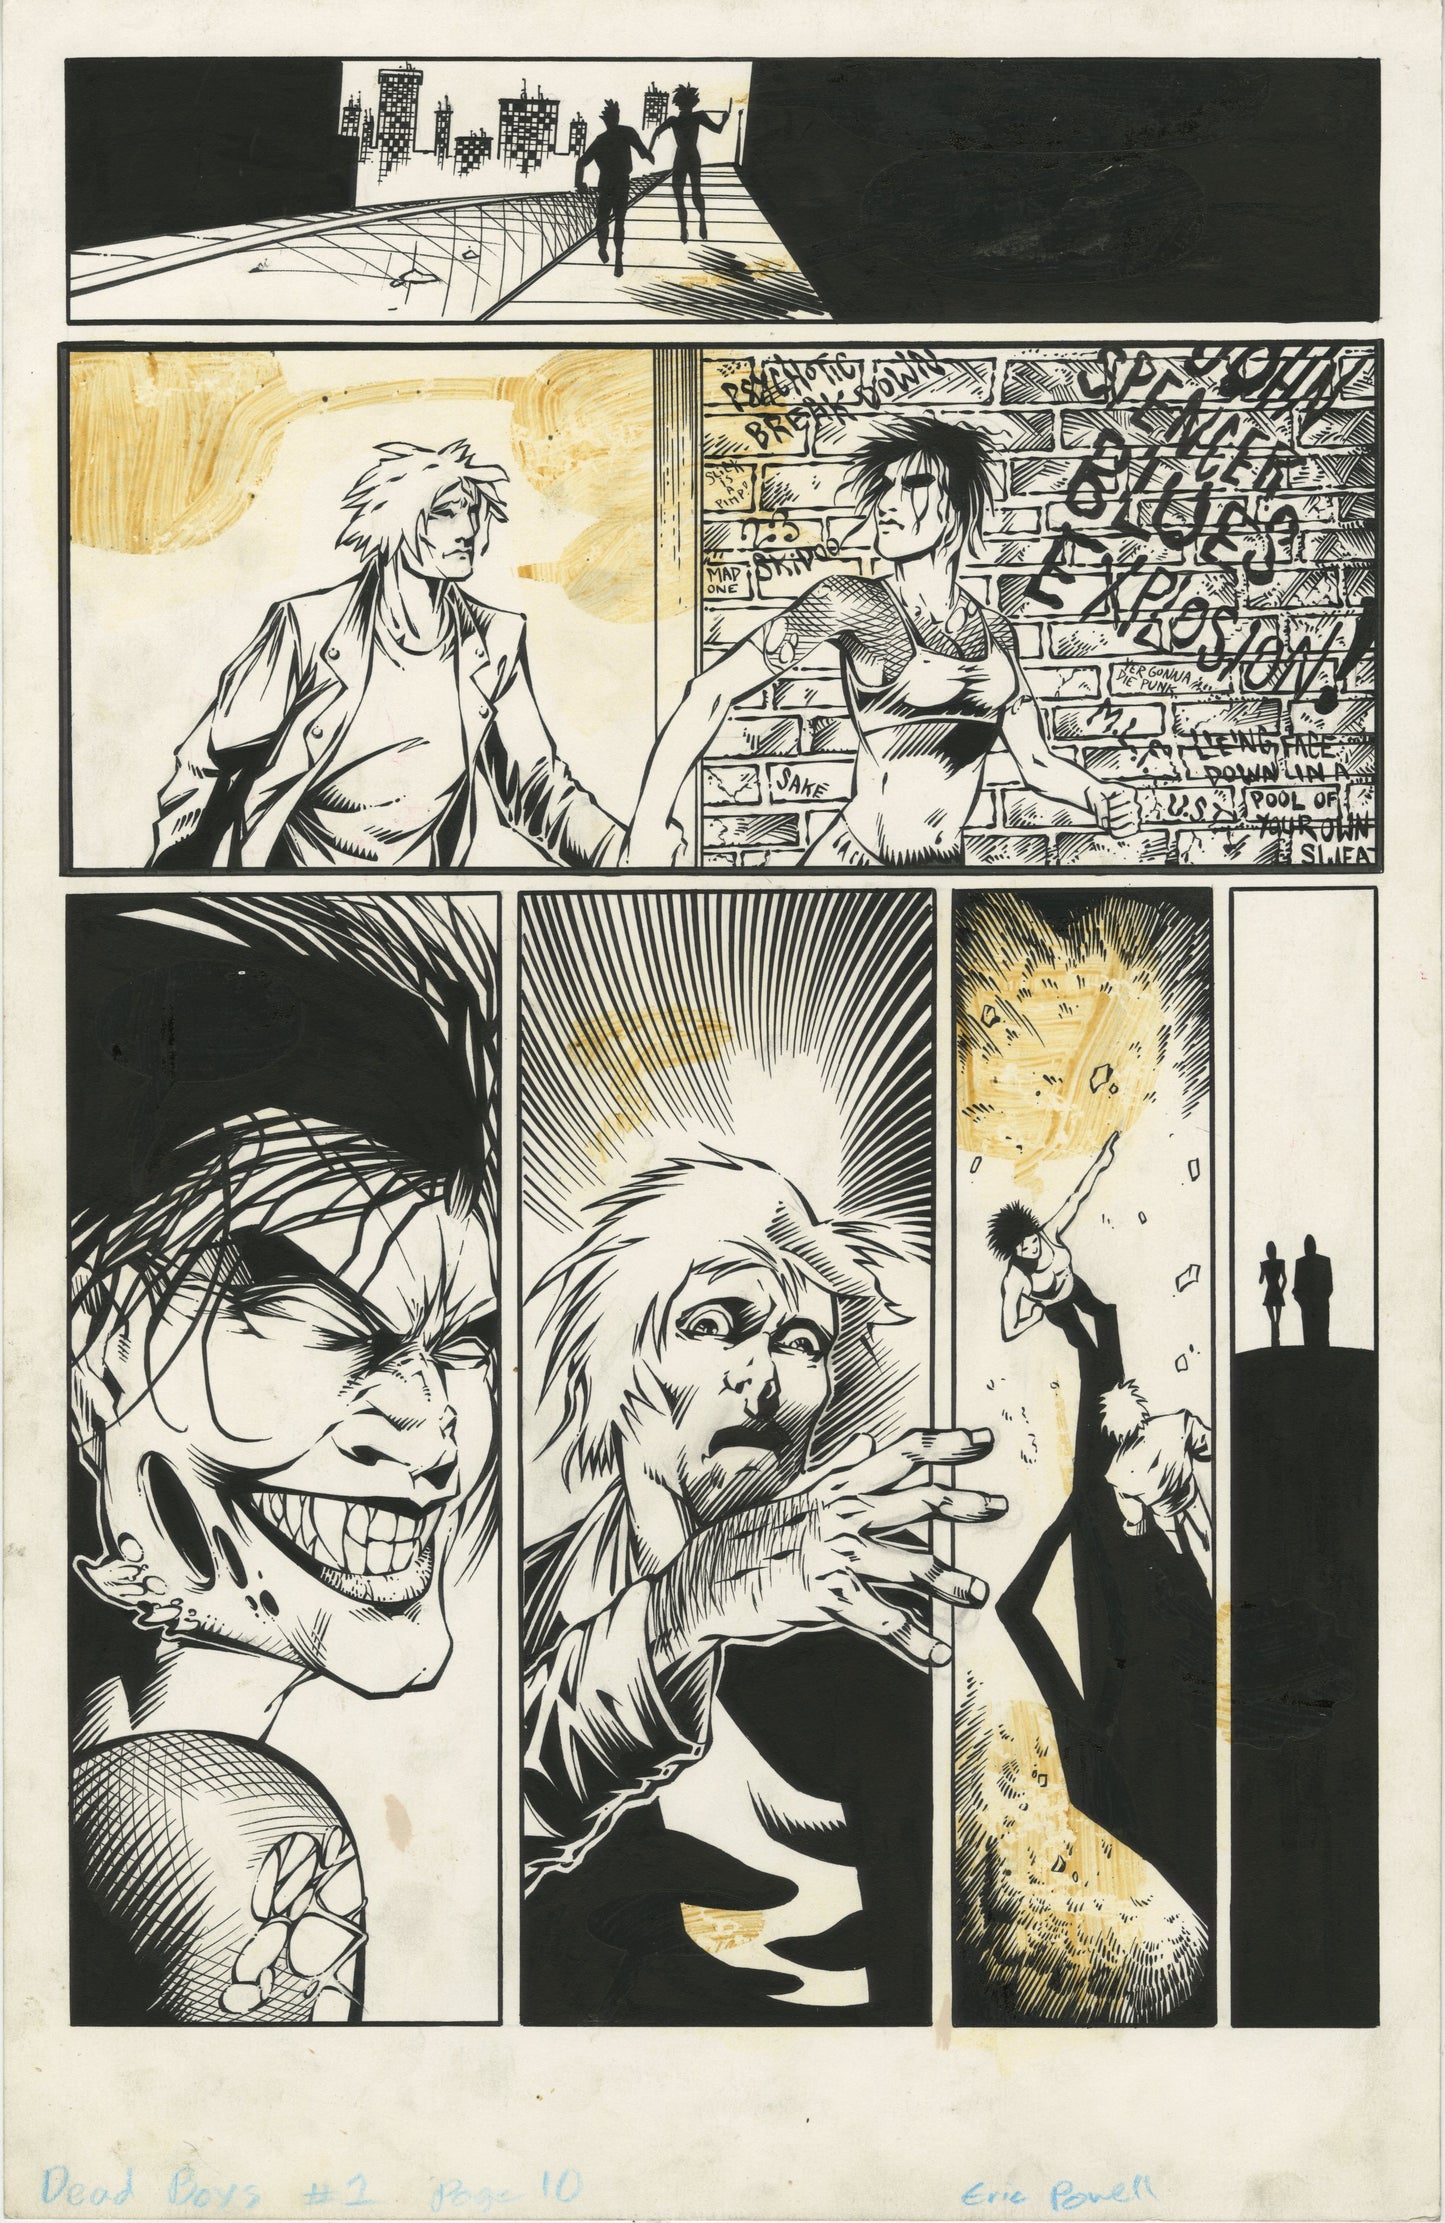 Dead Boys #1, page #10 (1997, unpublished)